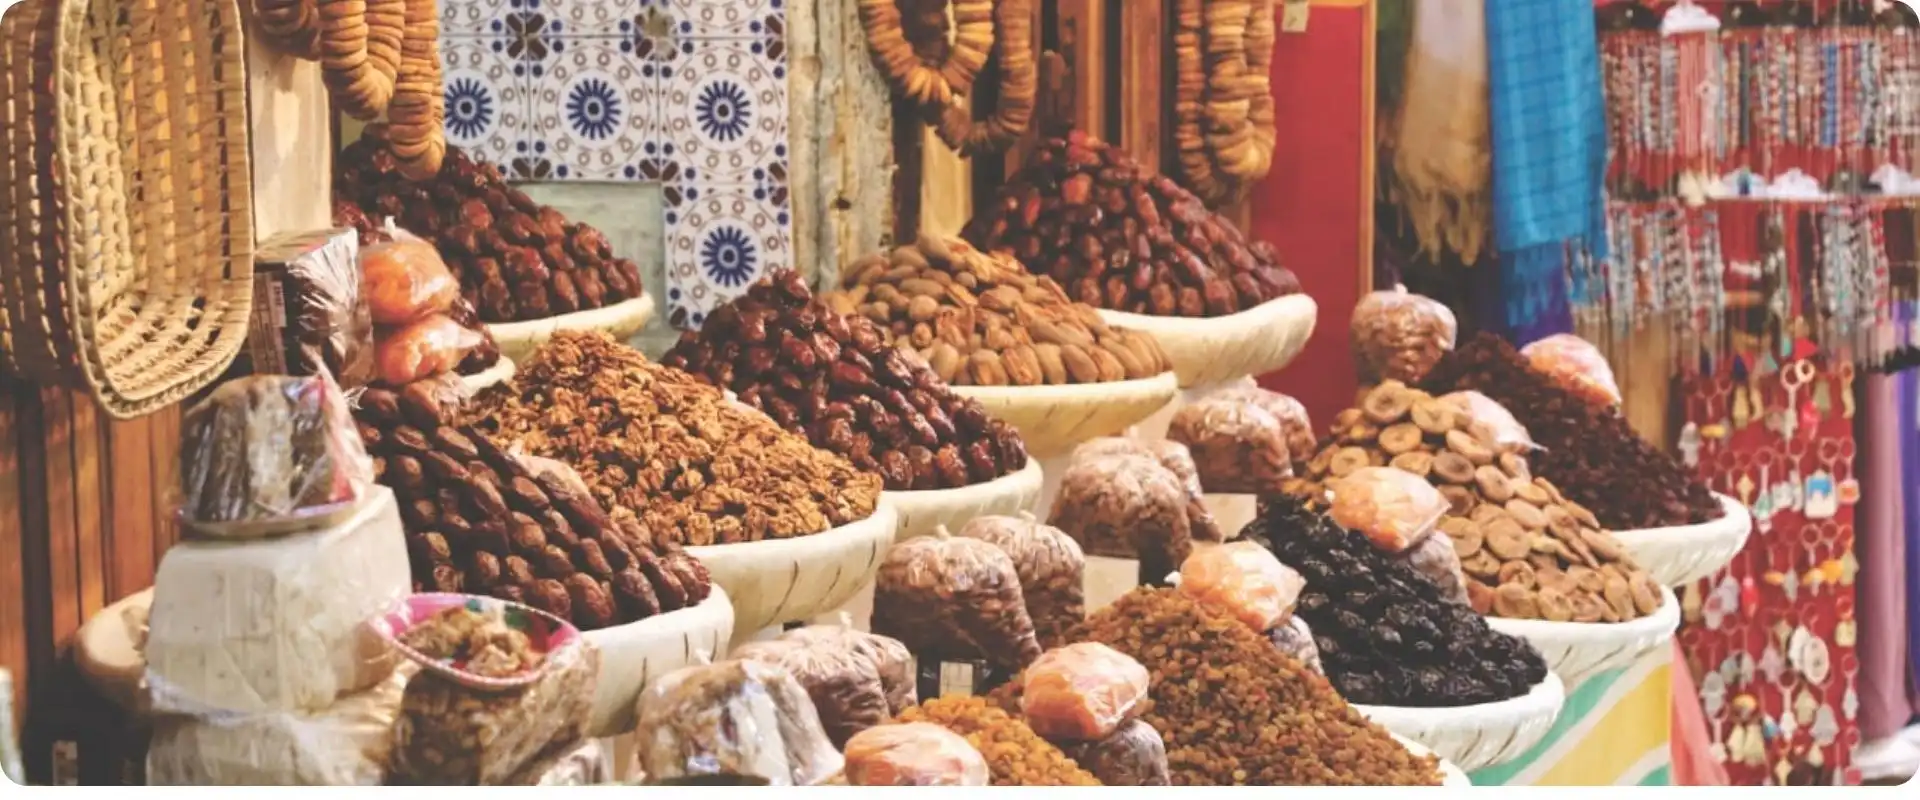 markede i marokko charterrejse fra hamborg.webp